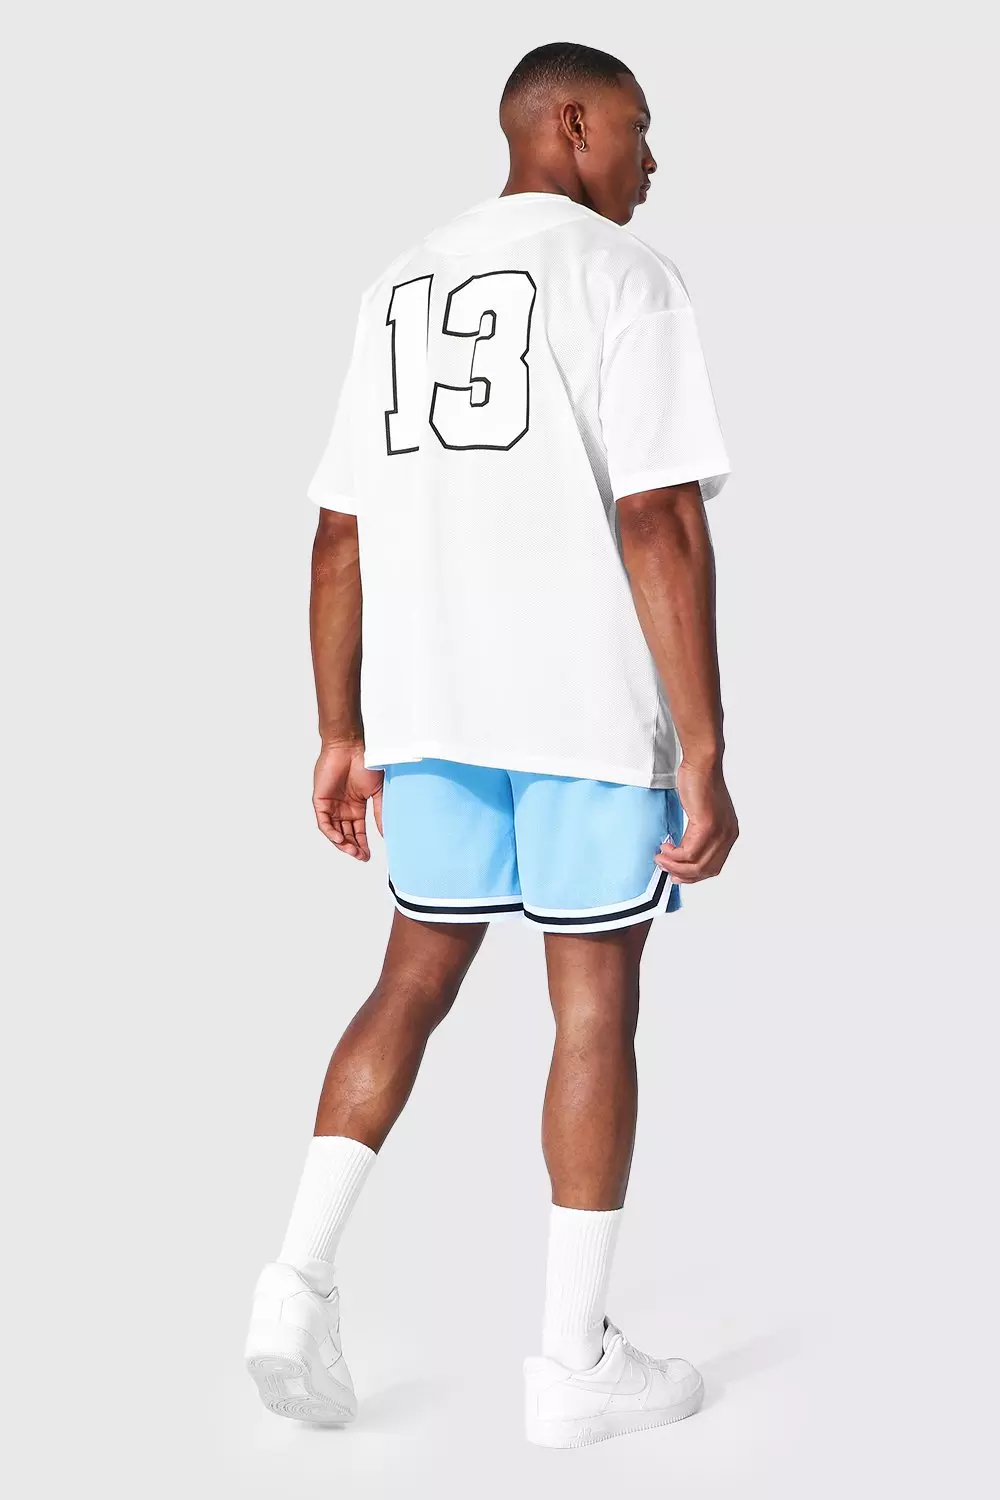 Colorful Shorts Men Fashion Streetwear Knee Length Basketball Shorts Men  Outdoor Workout Shorts - China Shorts and Basketball Shorts price